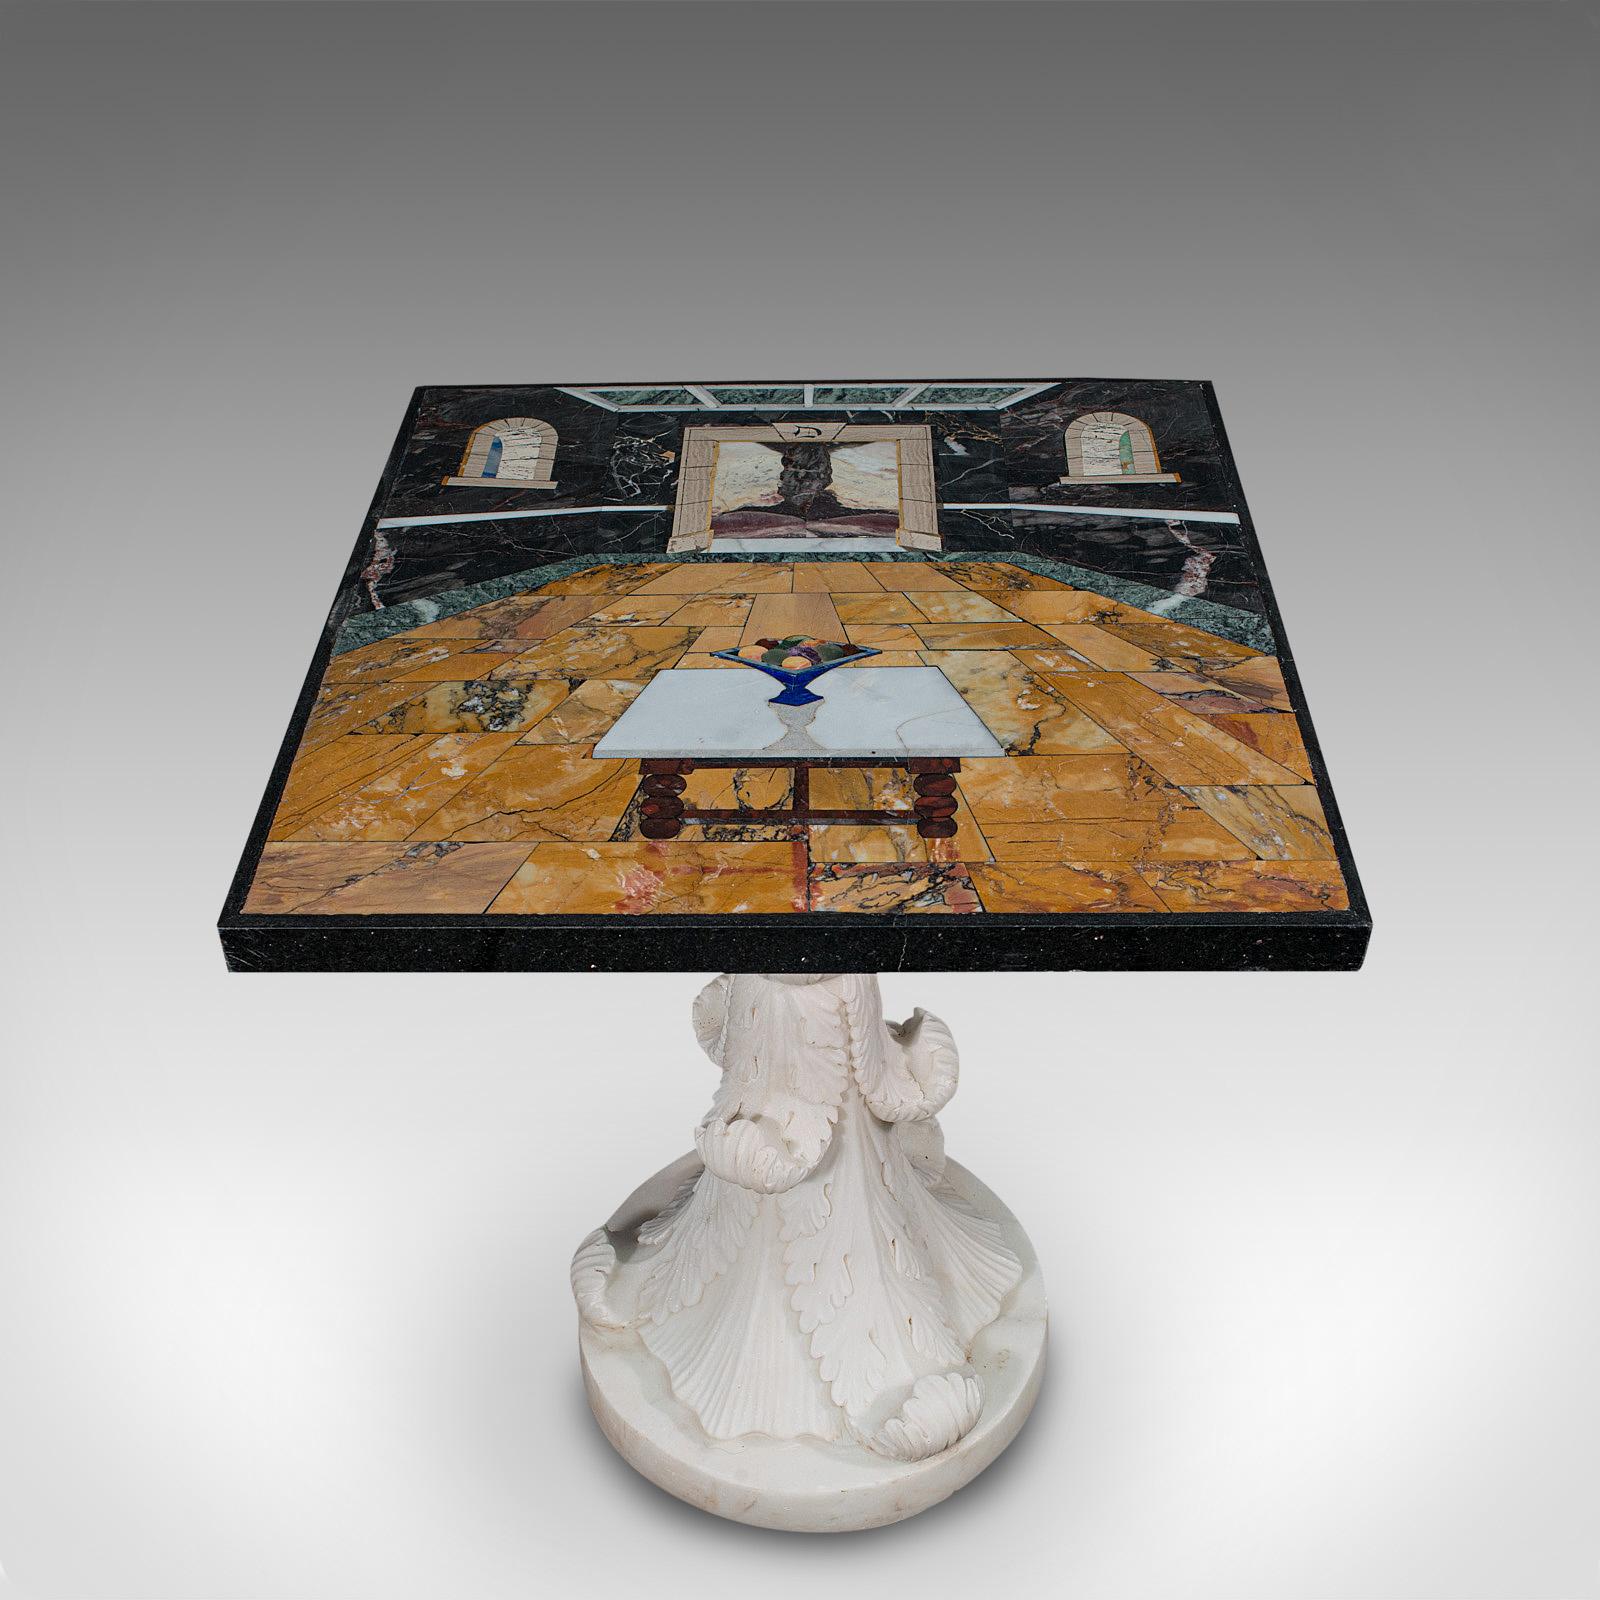 20th Century 'Cornucopia' Vintage Decorative Marble Table, English, Handmade, Pietra Dura For Sale